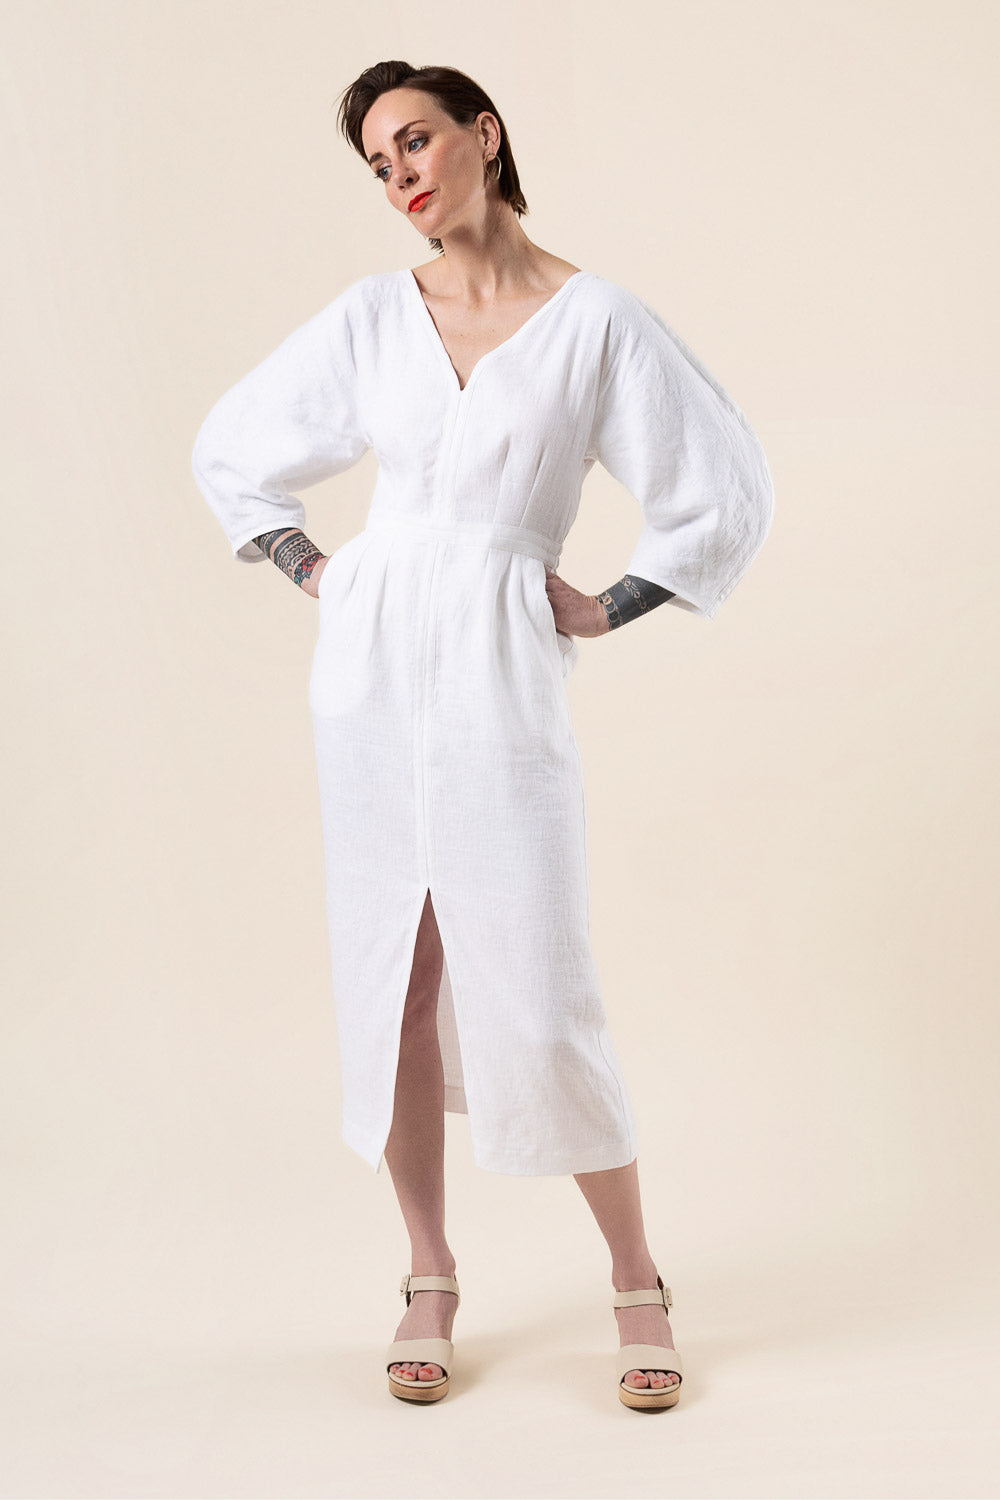 The Jo Dress + Jumpsuit - Closet Core | Blackbird Fabrics